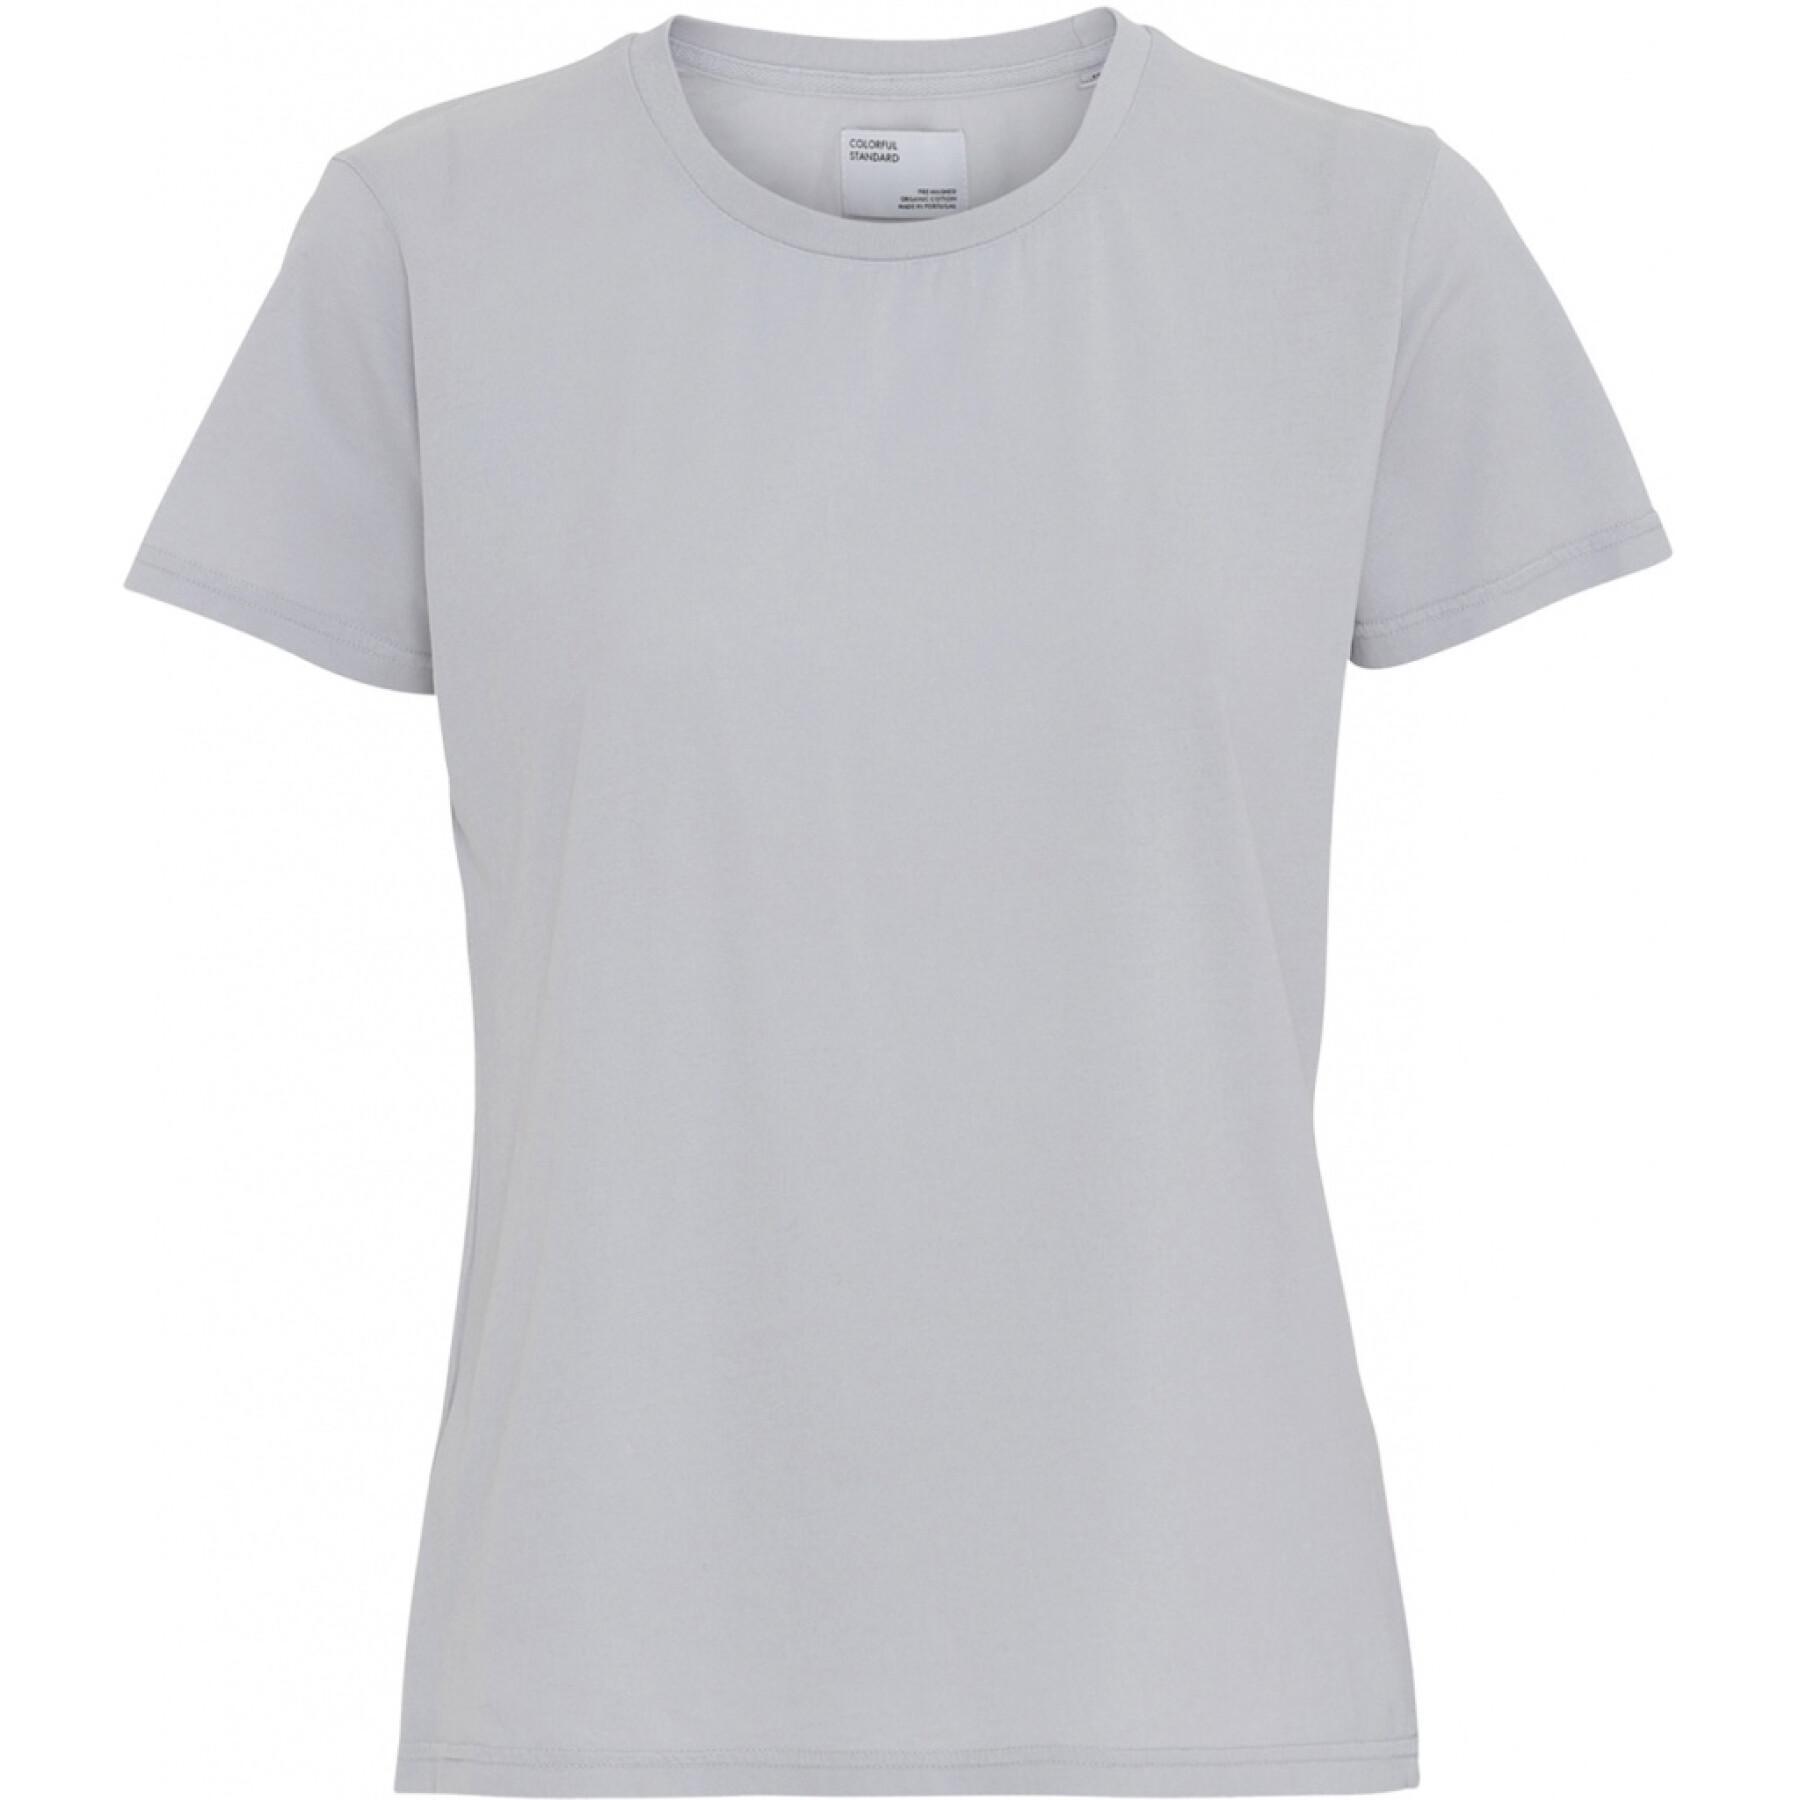 T-shirt femme Colorful Standard Light Organic limestone grey